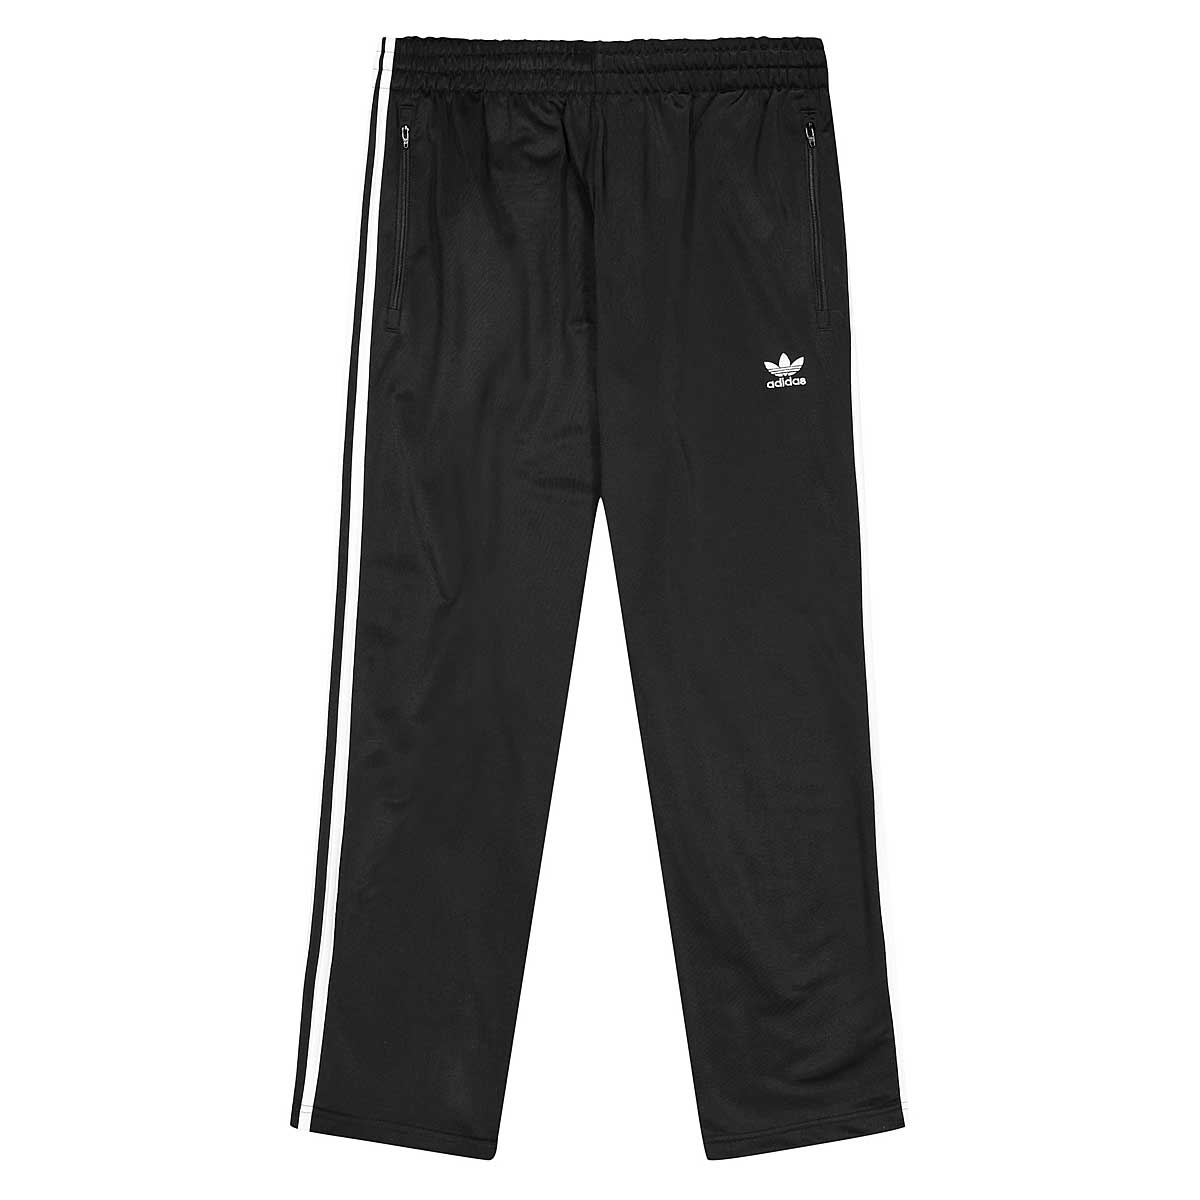 Adidas Originals Firebird Pant, Black